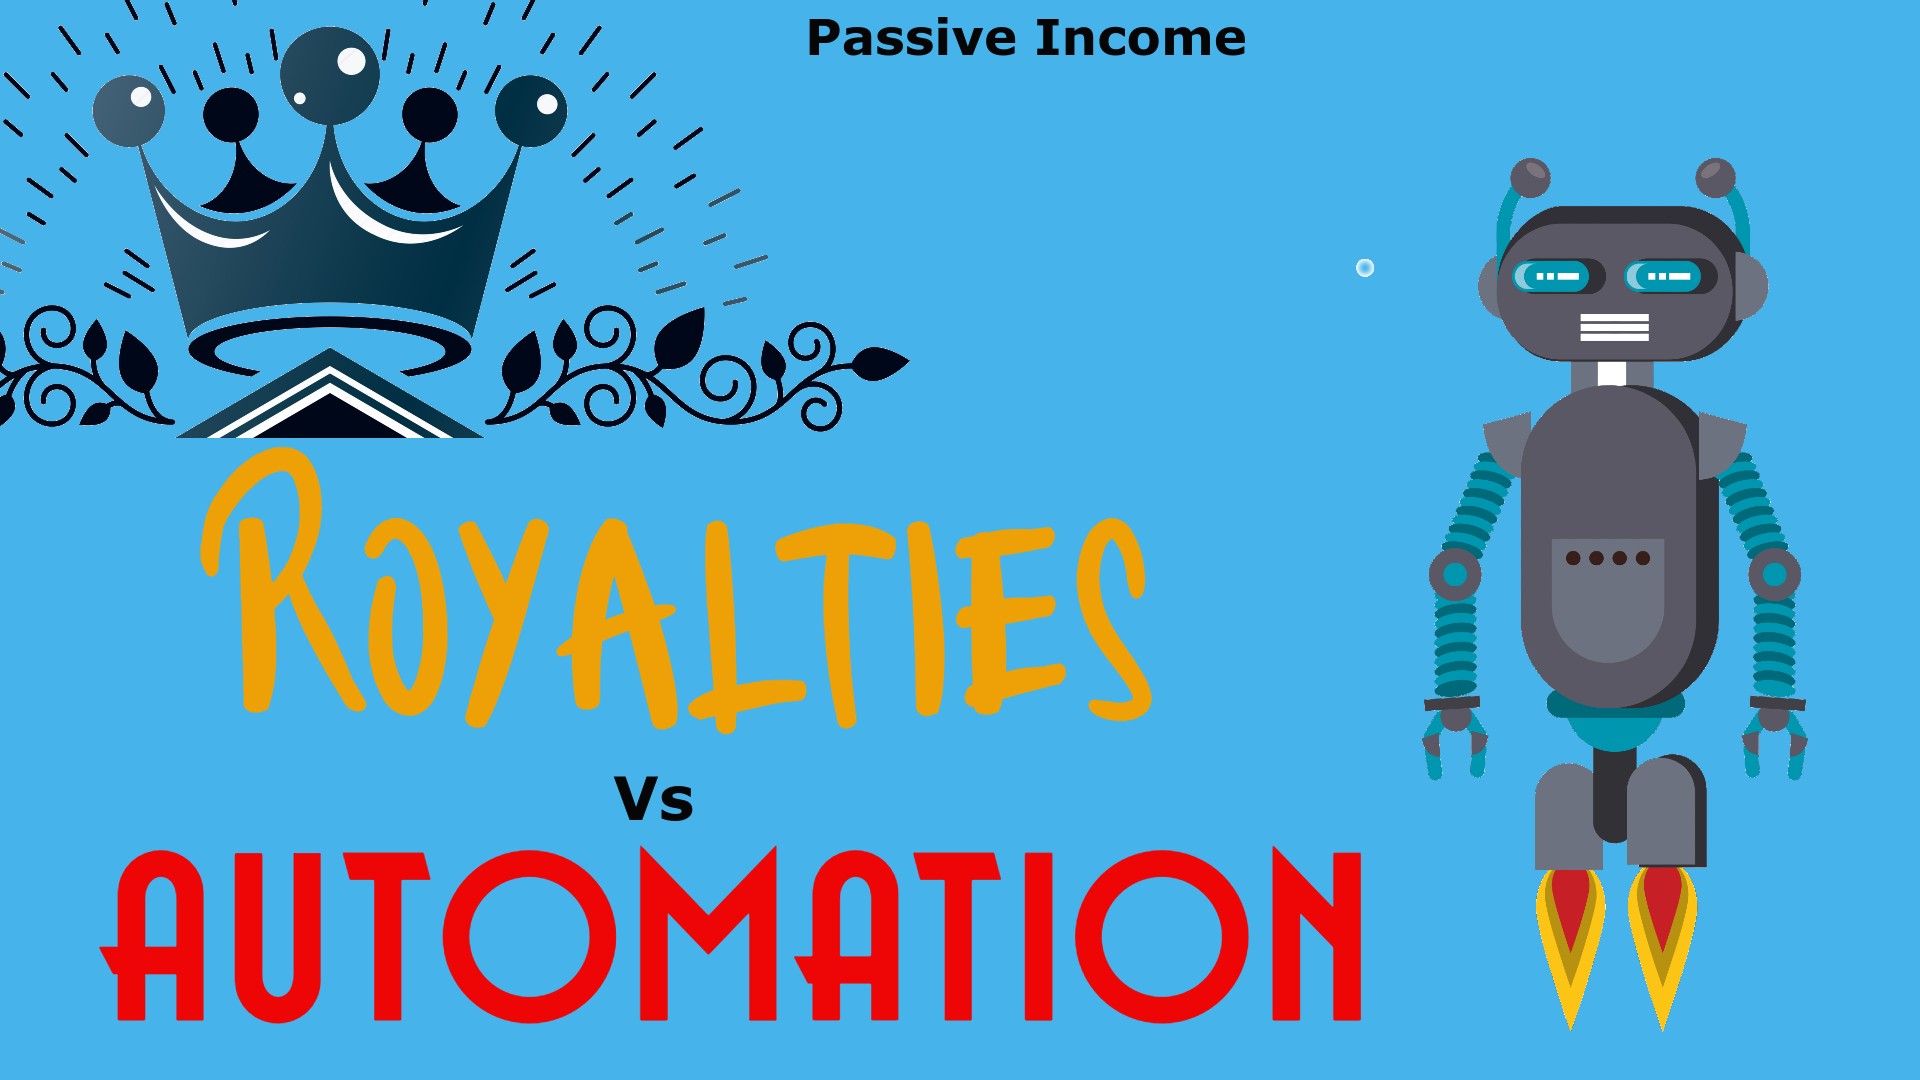 Passive Income: Royalties vs. Automation